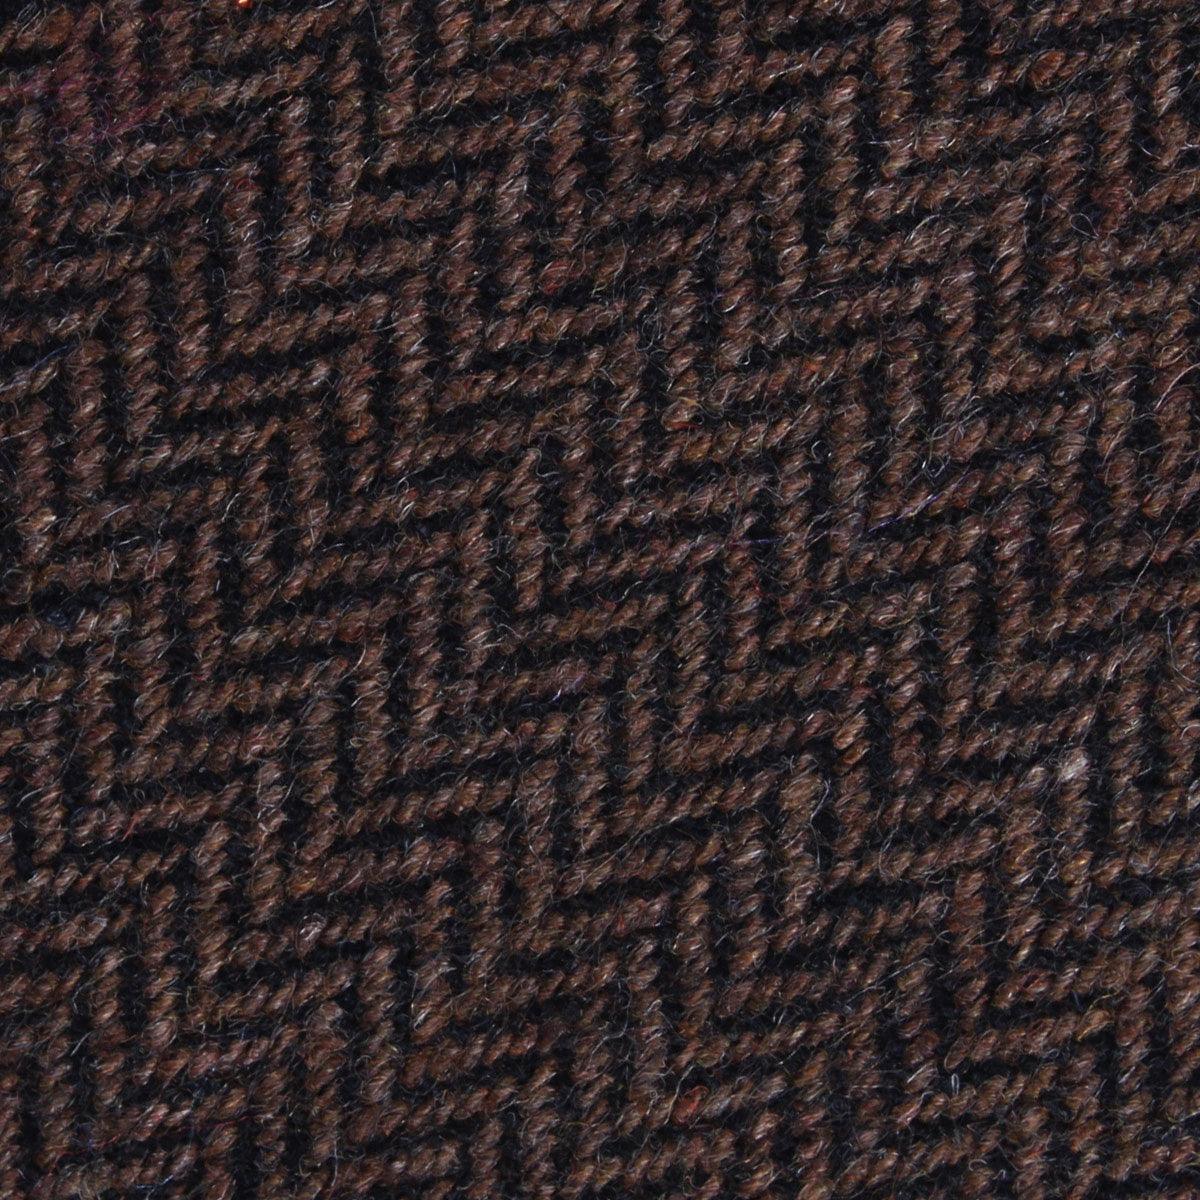 Cinnamon Herringbone Fabric Pocket Square